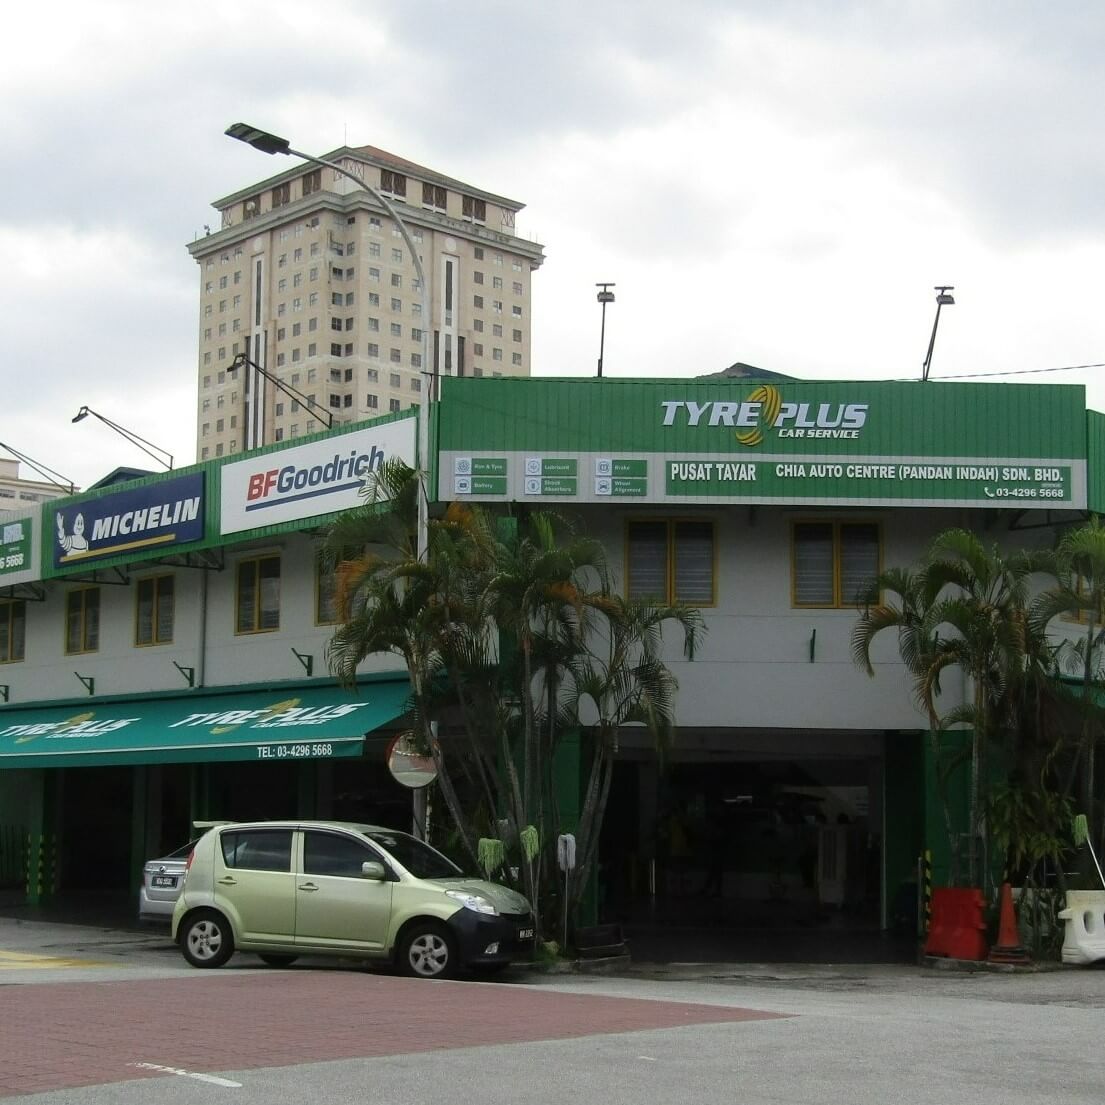 Tyreplus - Chia Auto Centre (Pandan Indah) Ampang